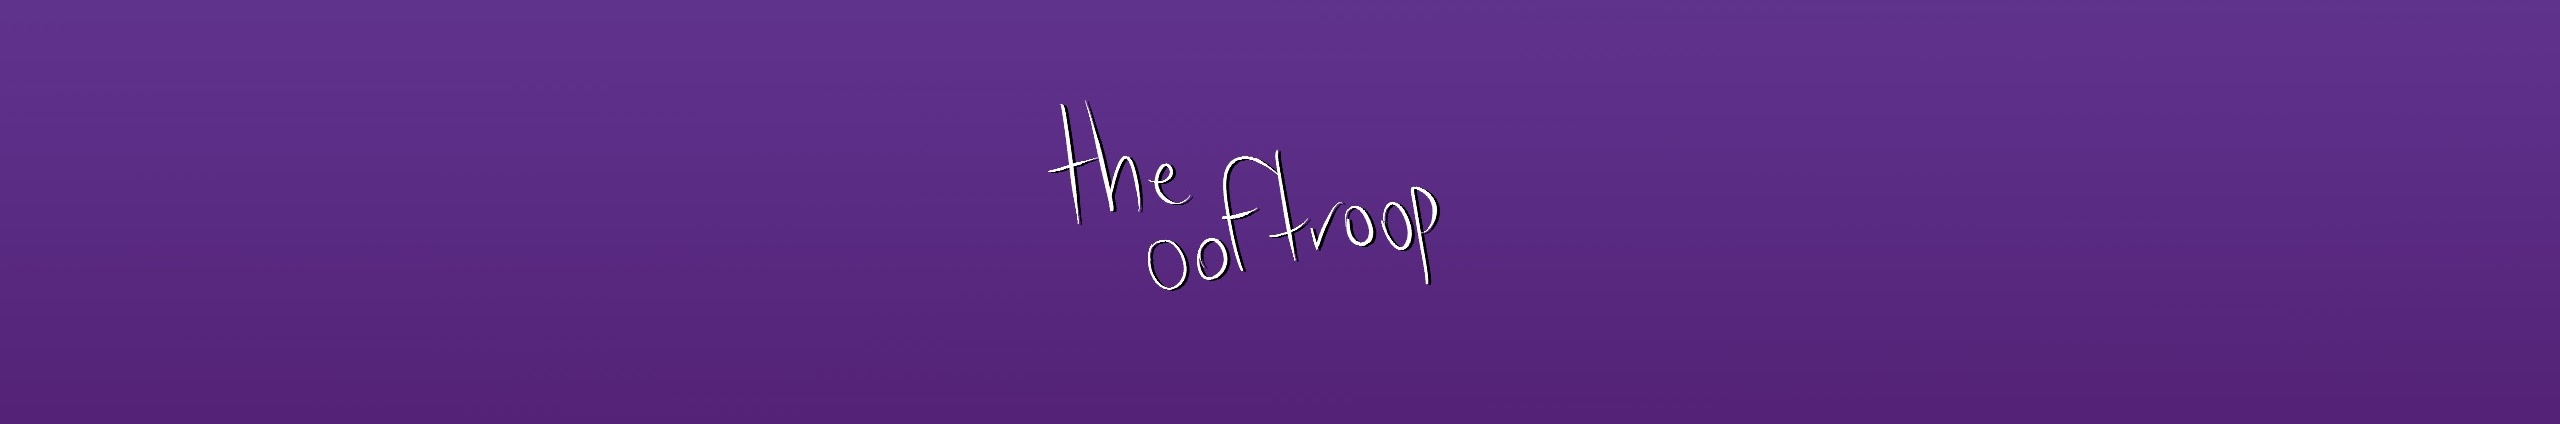 the ooftroop - On Tuby